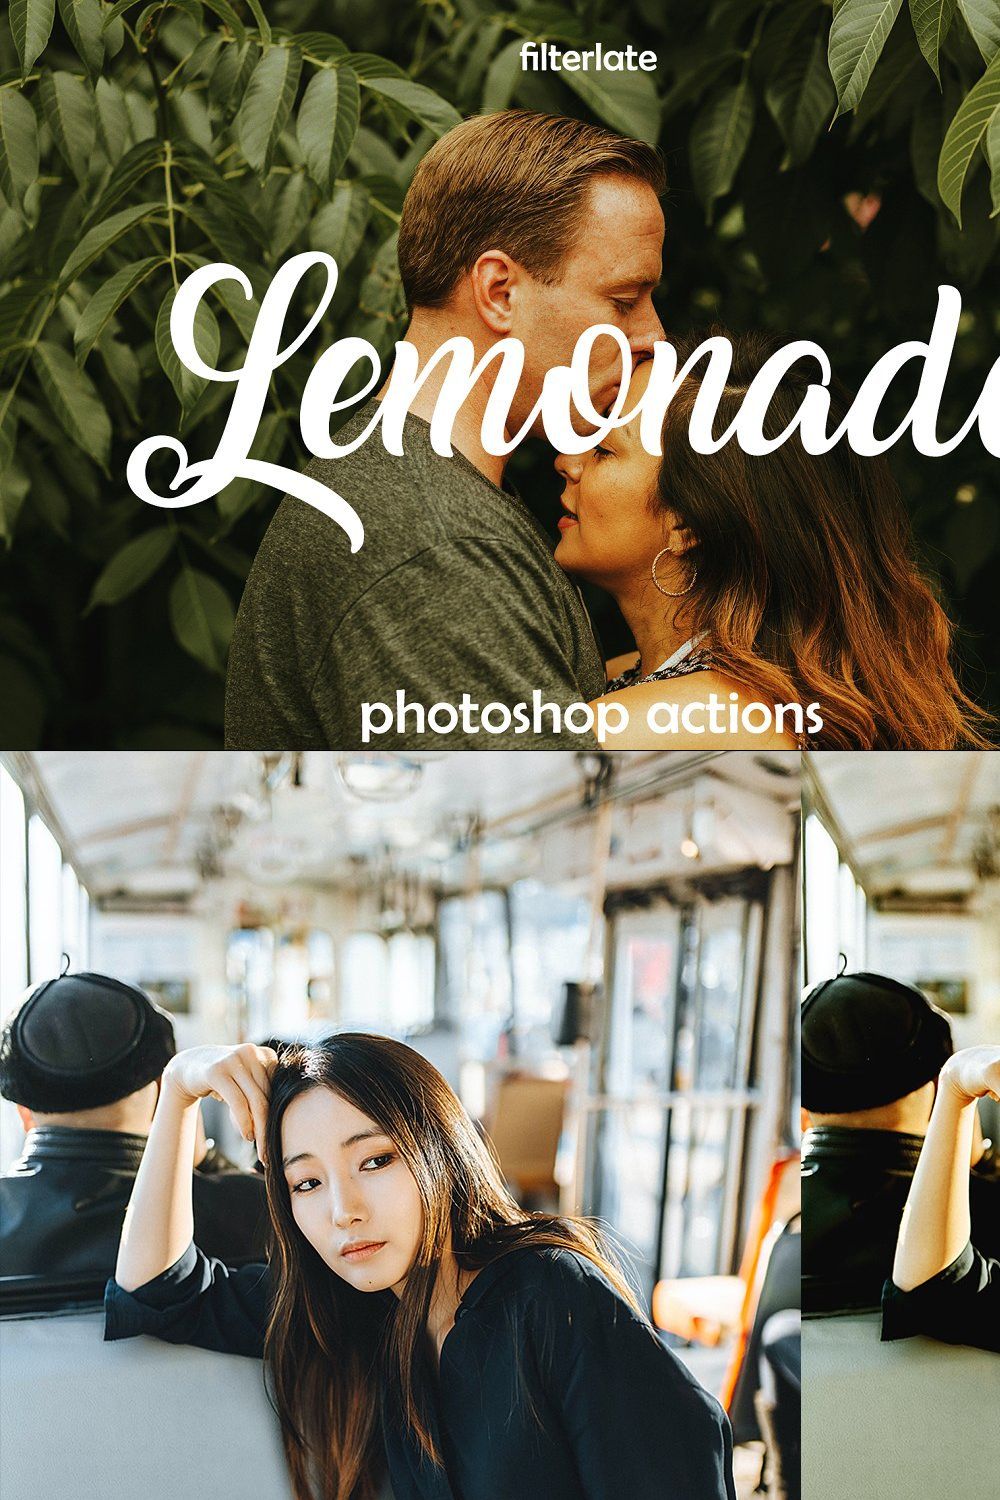 Lemonade | Photoshop Actions pinterest preview image.